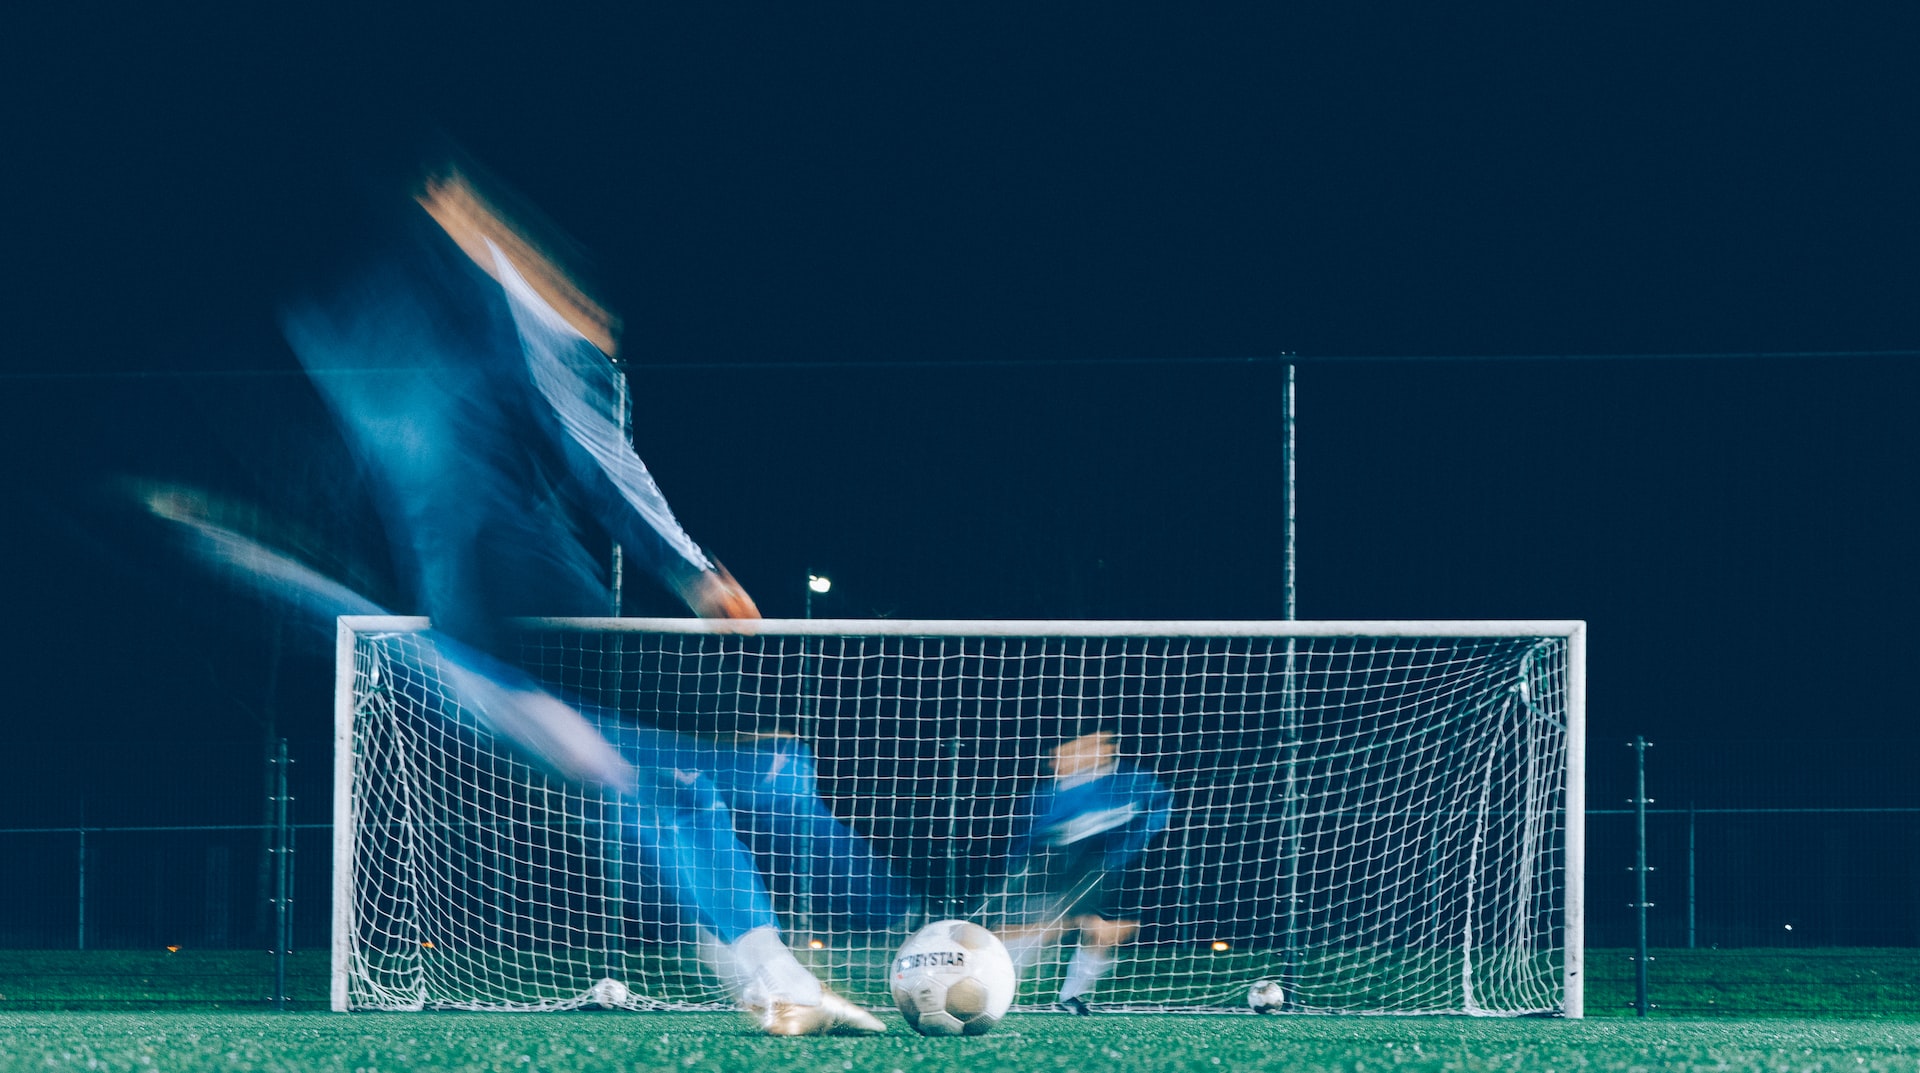 DeepMind leva inteligência artificial para jogar futebol